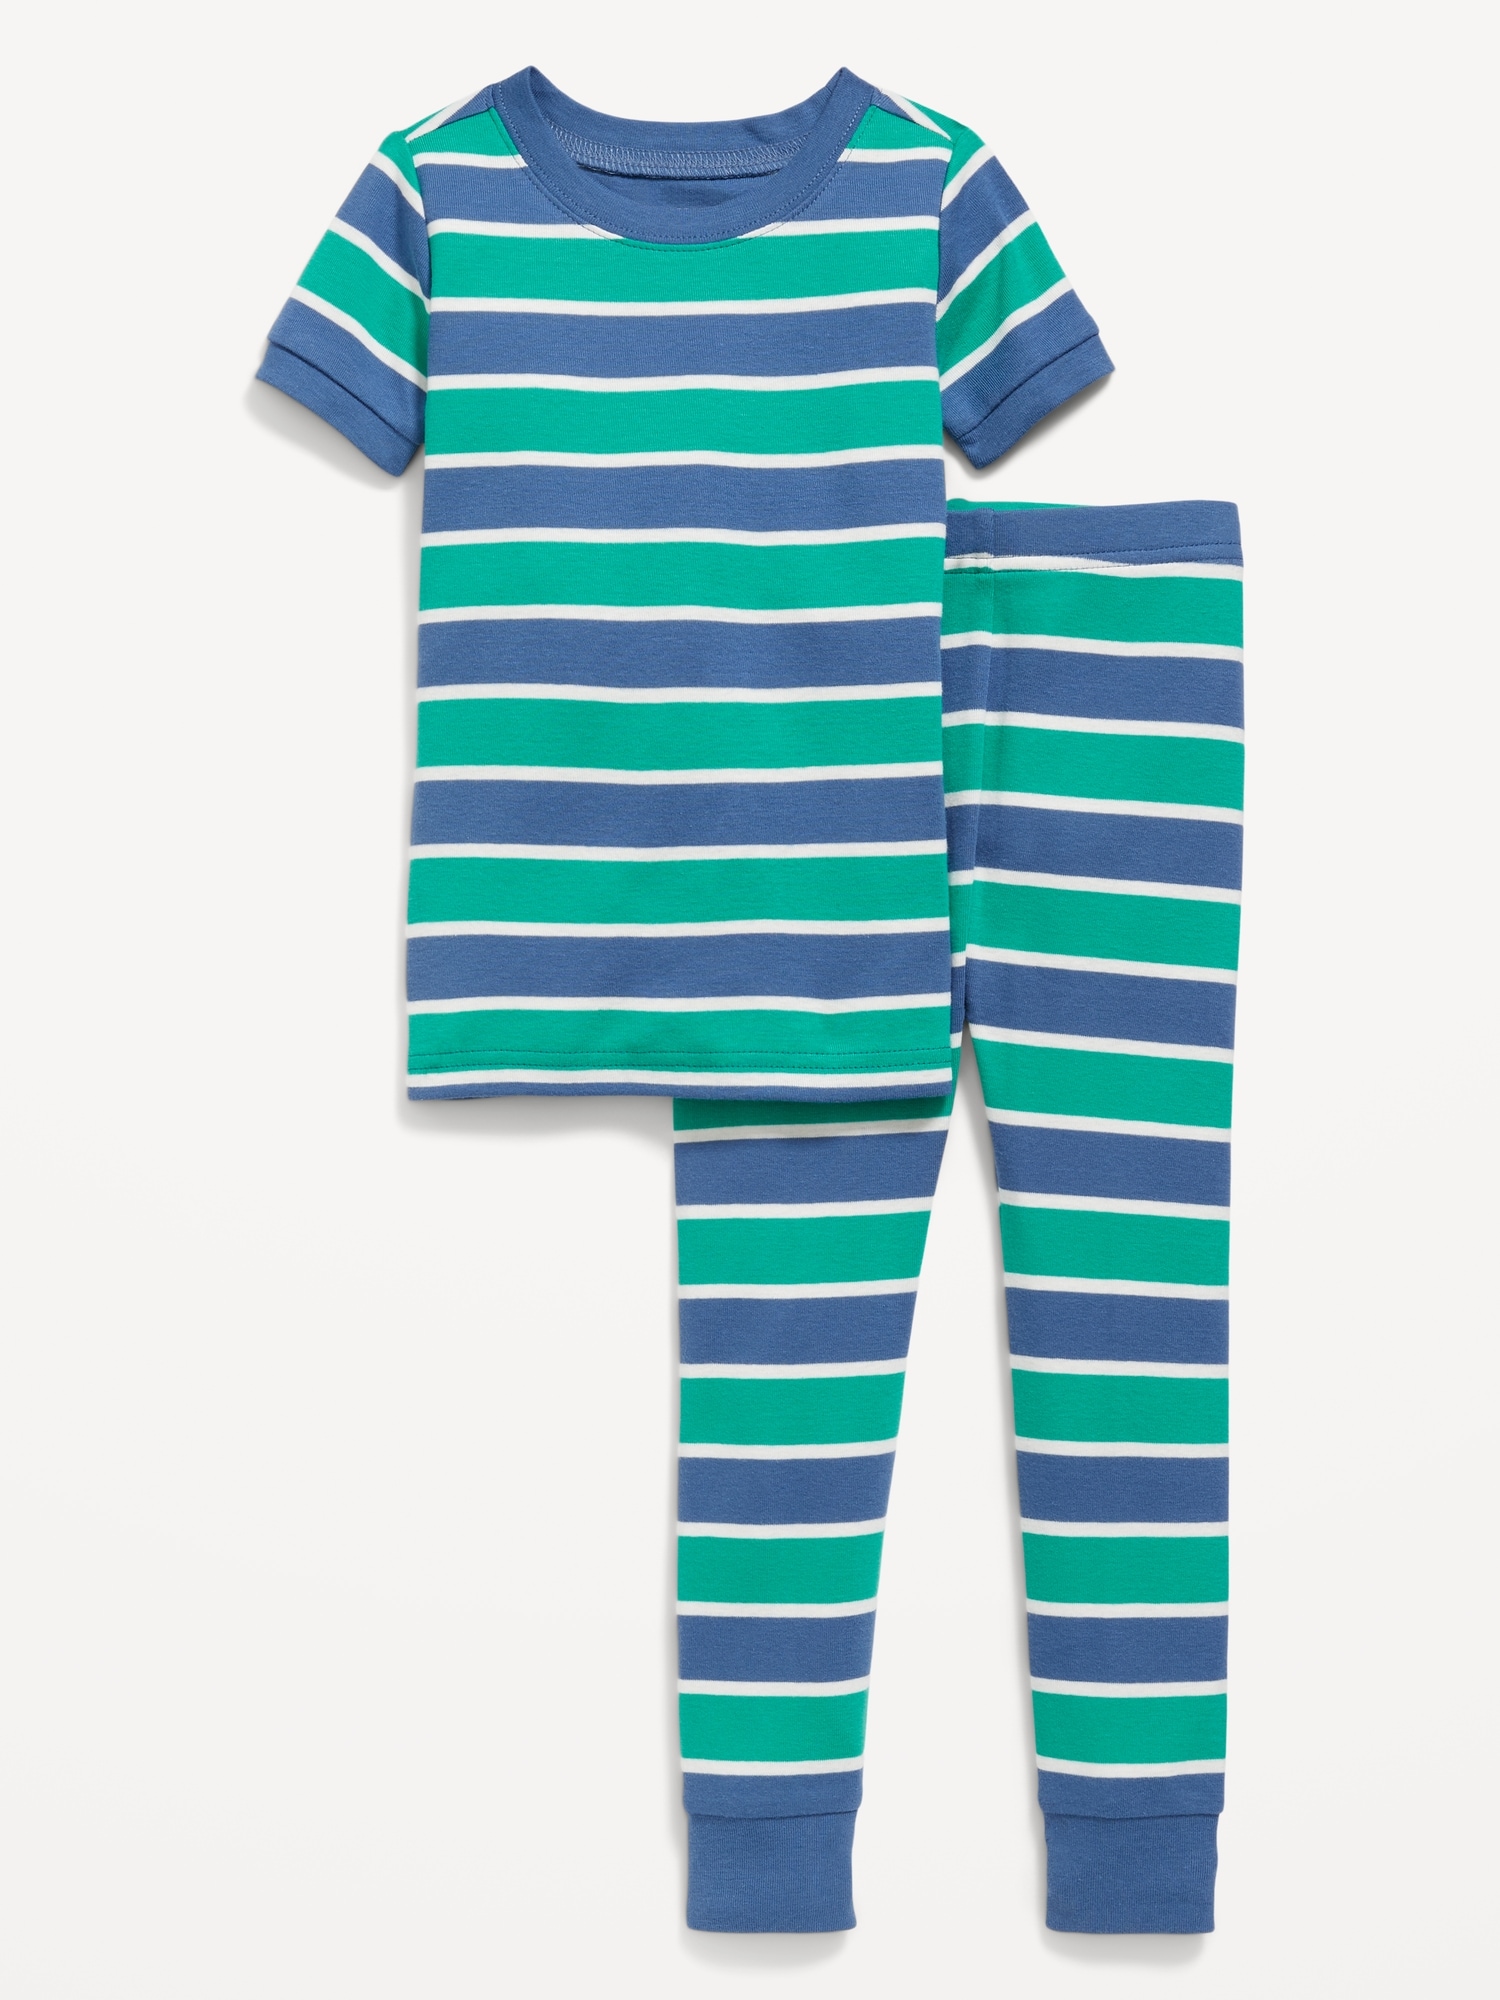 Unisex Snug-Fit Printed Pajama Set for Toddler & Baby Hot Deal